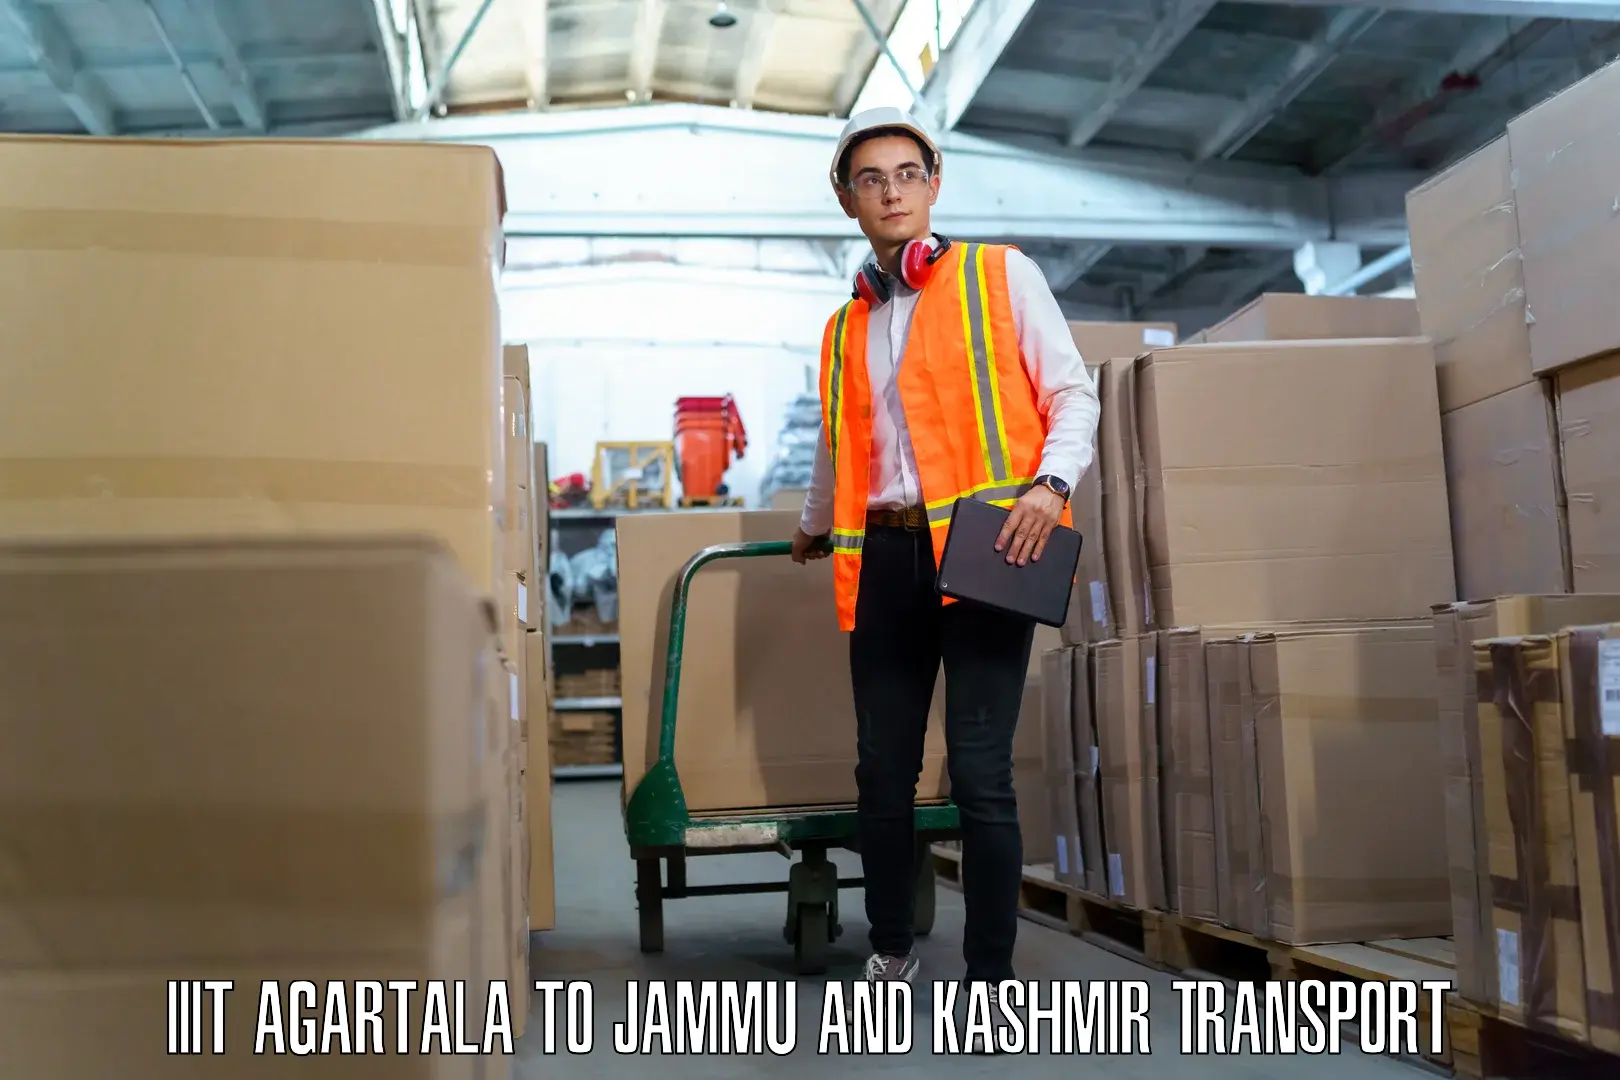 Cargo train transport services IIIT Agartala to Jammu and Kashmir